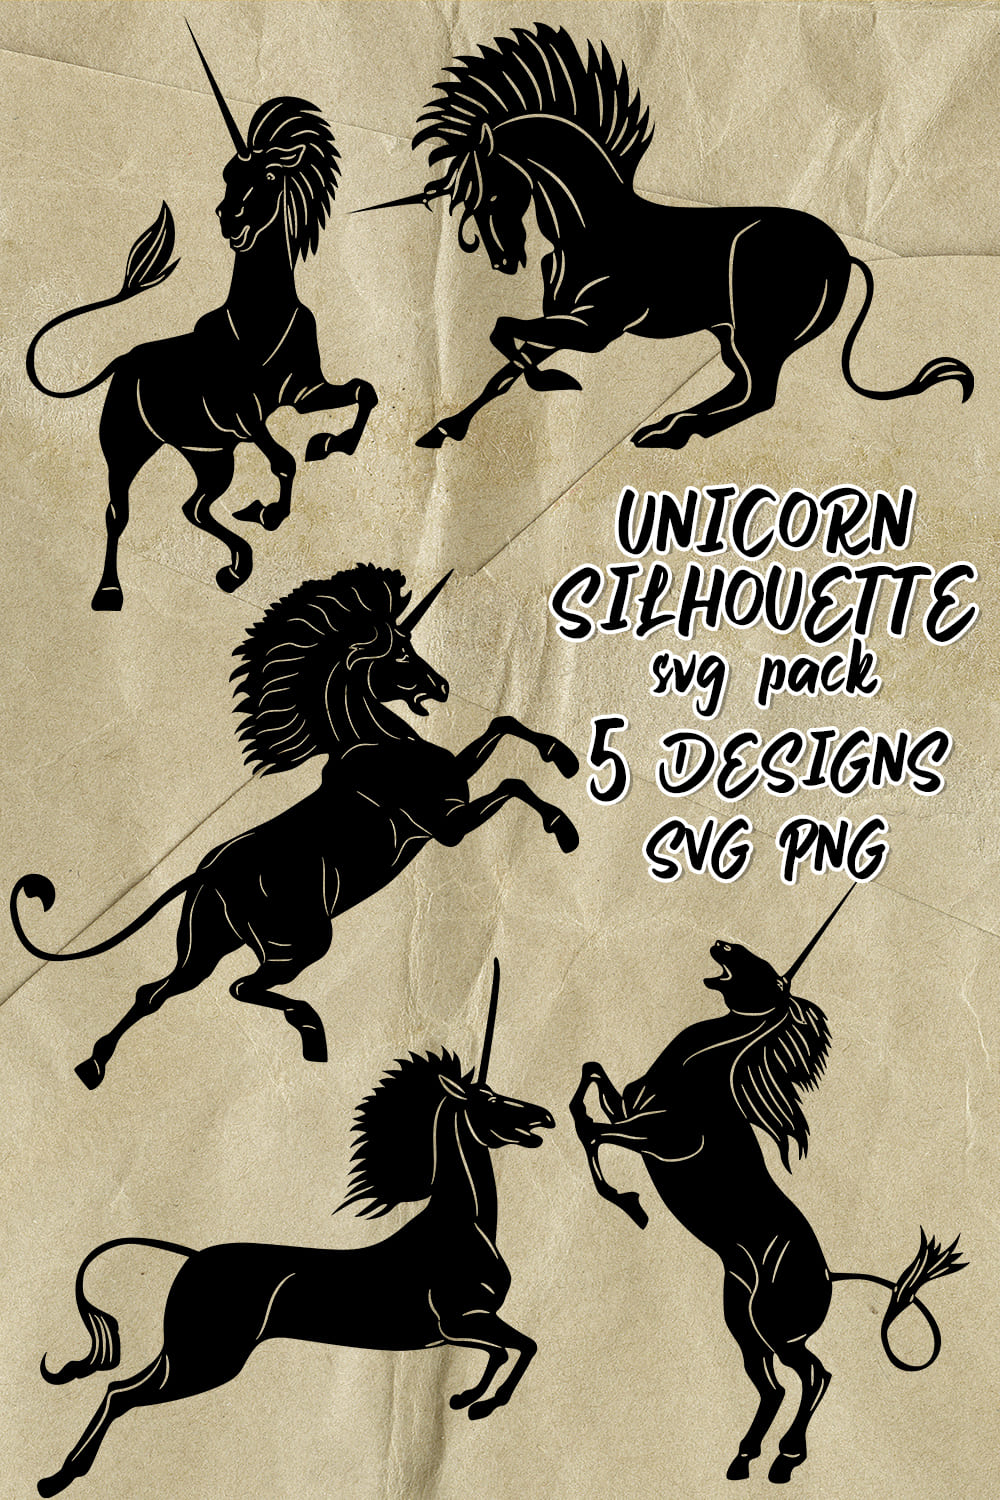 Unicorn Silhouette SVG - pinterest image preview.